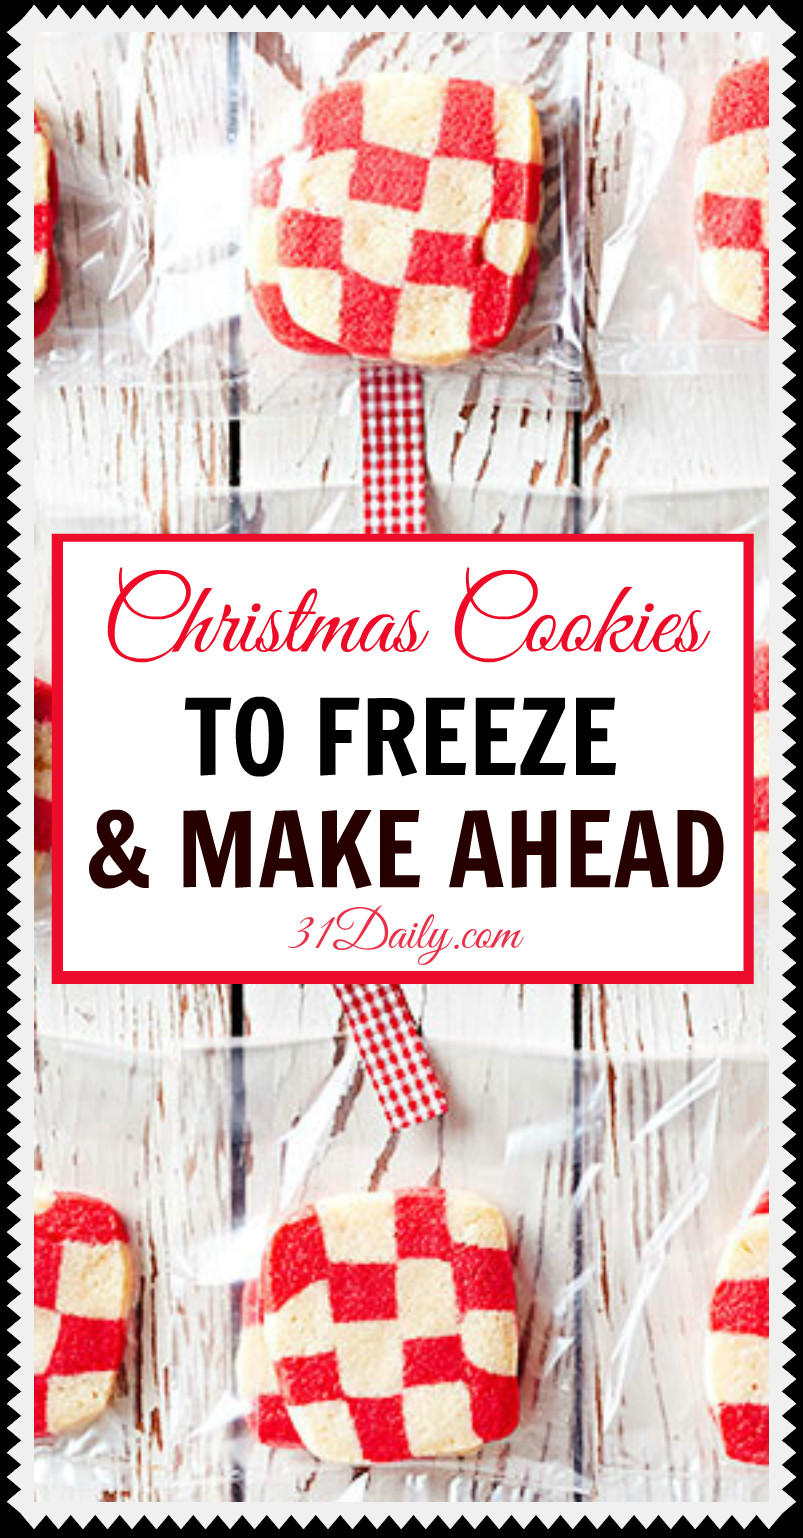 Make Ahead Christmas Cookies
 Christmas Cookies to Bake Ahead 31 Daily